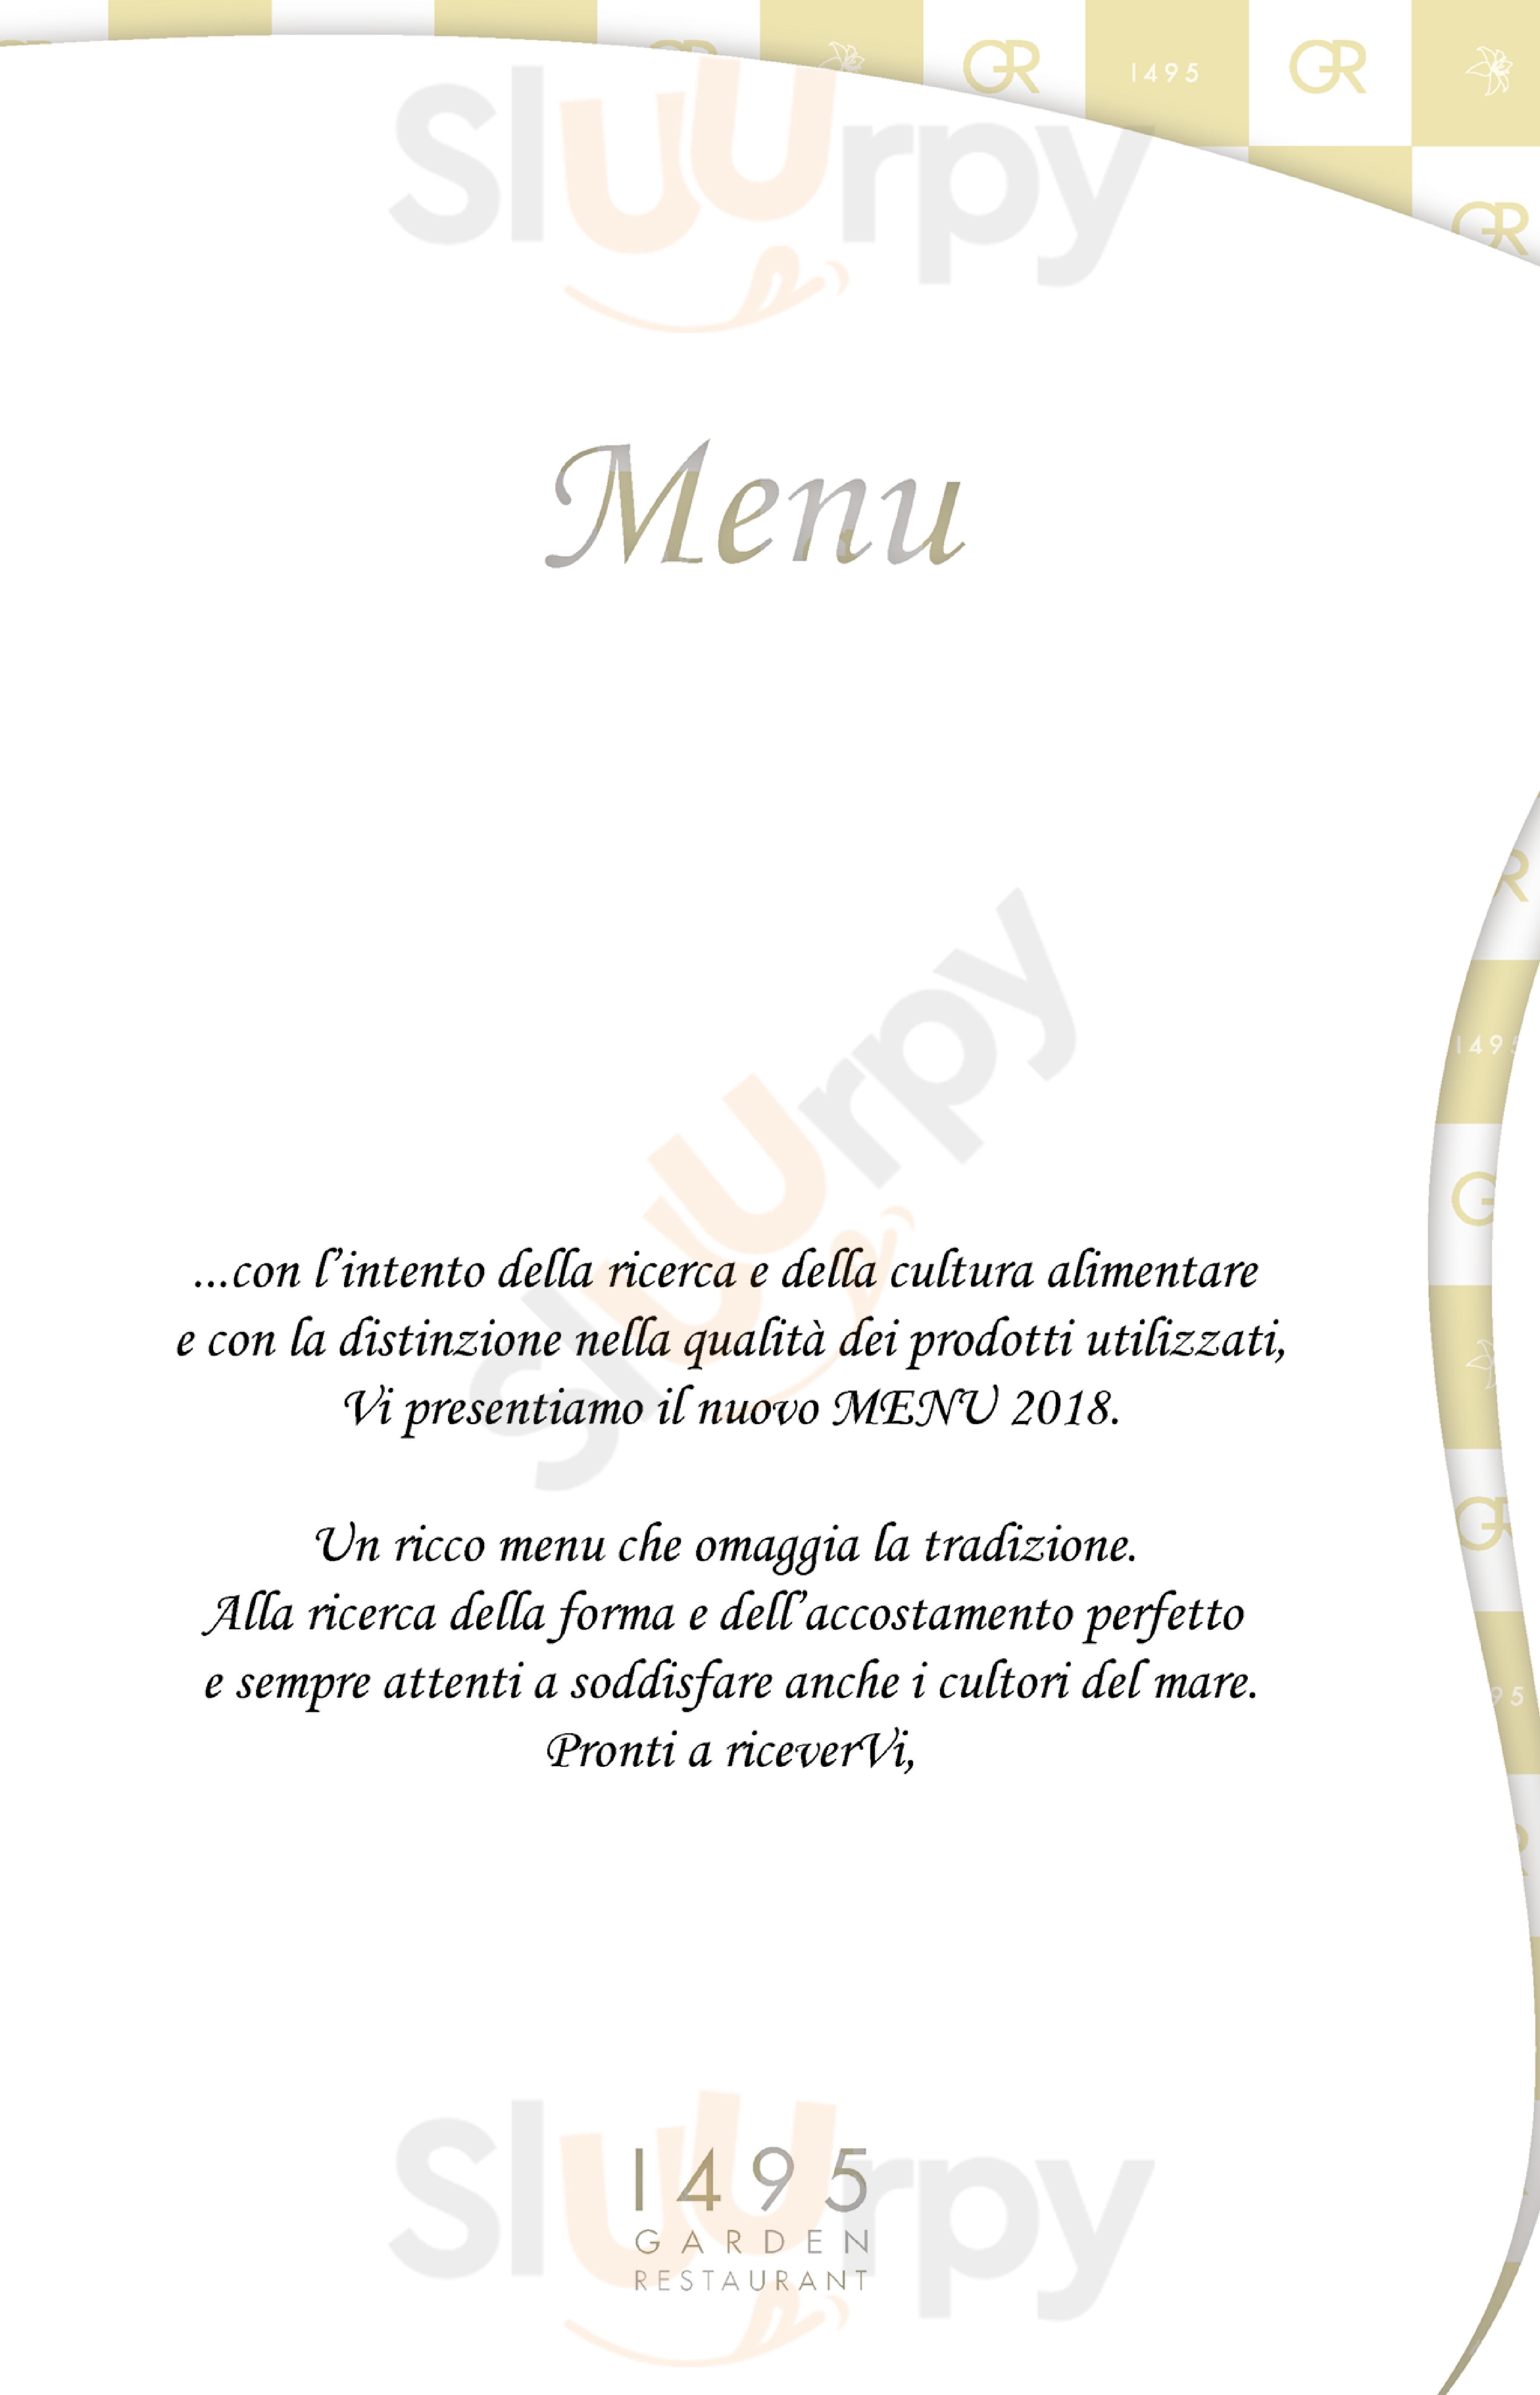 1495 Restaurant & Lounge Bar Scandiano menù 1 pagina